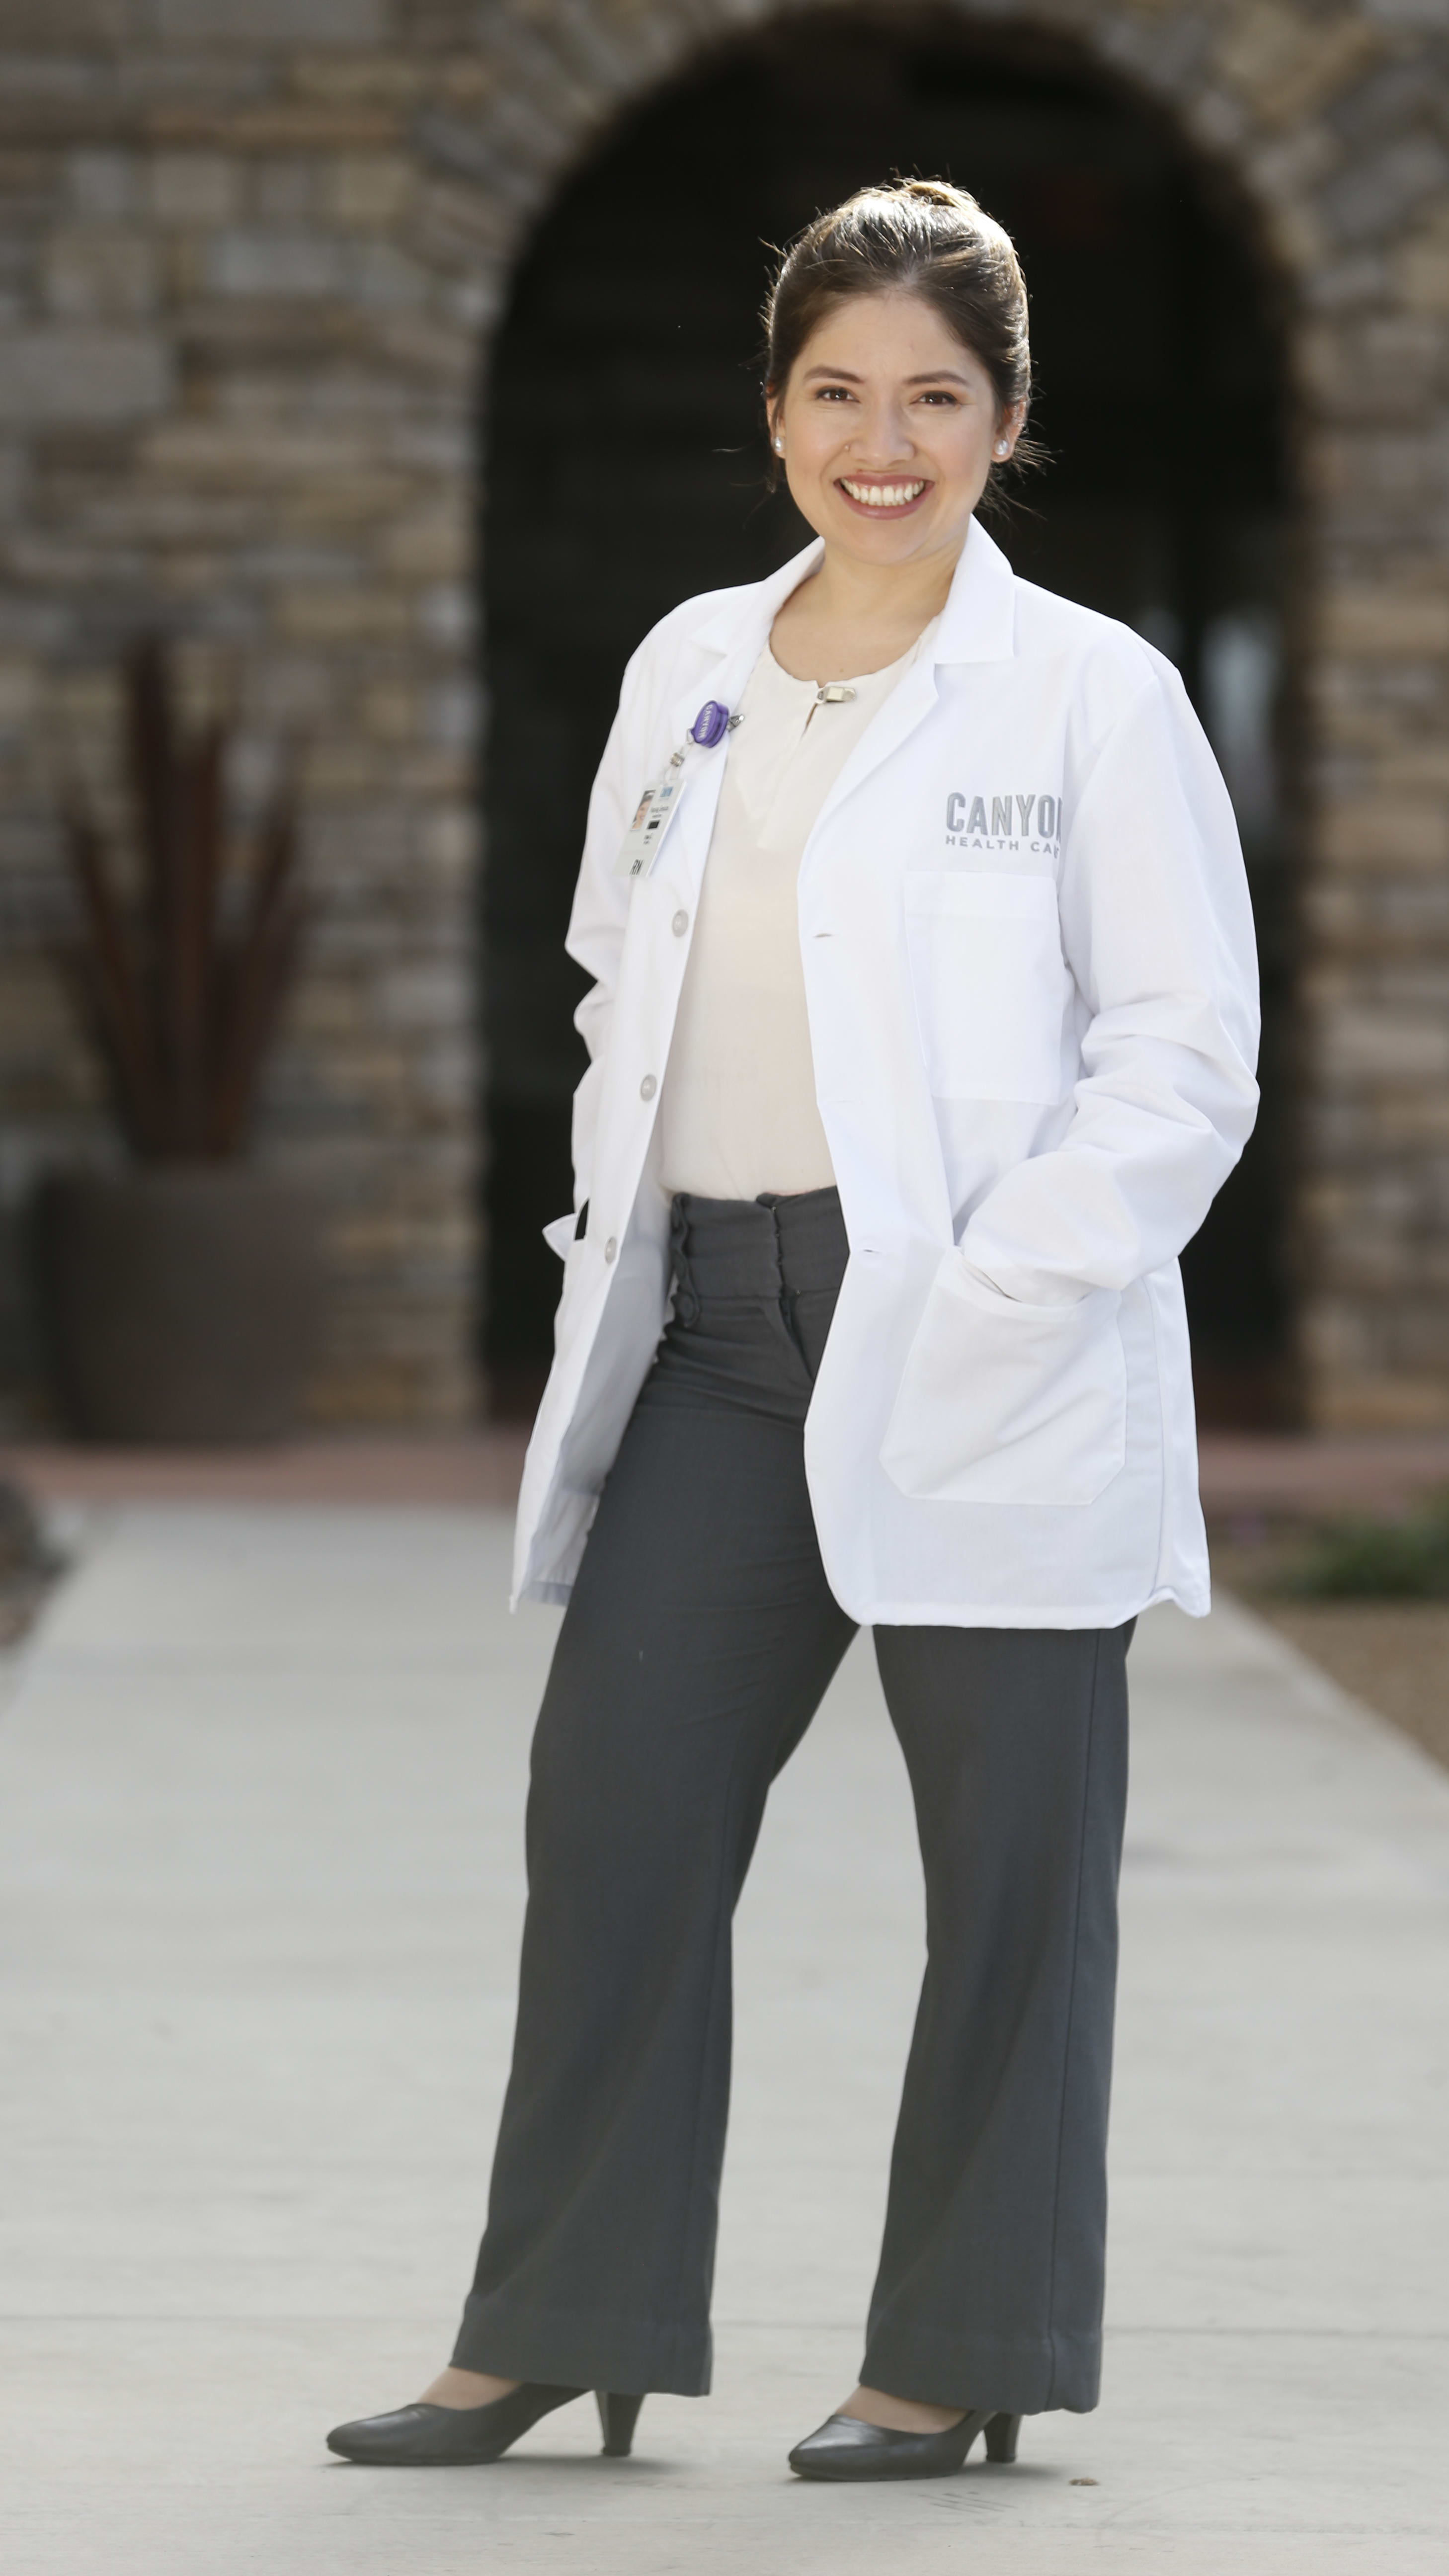 female nurse portrait in white coat